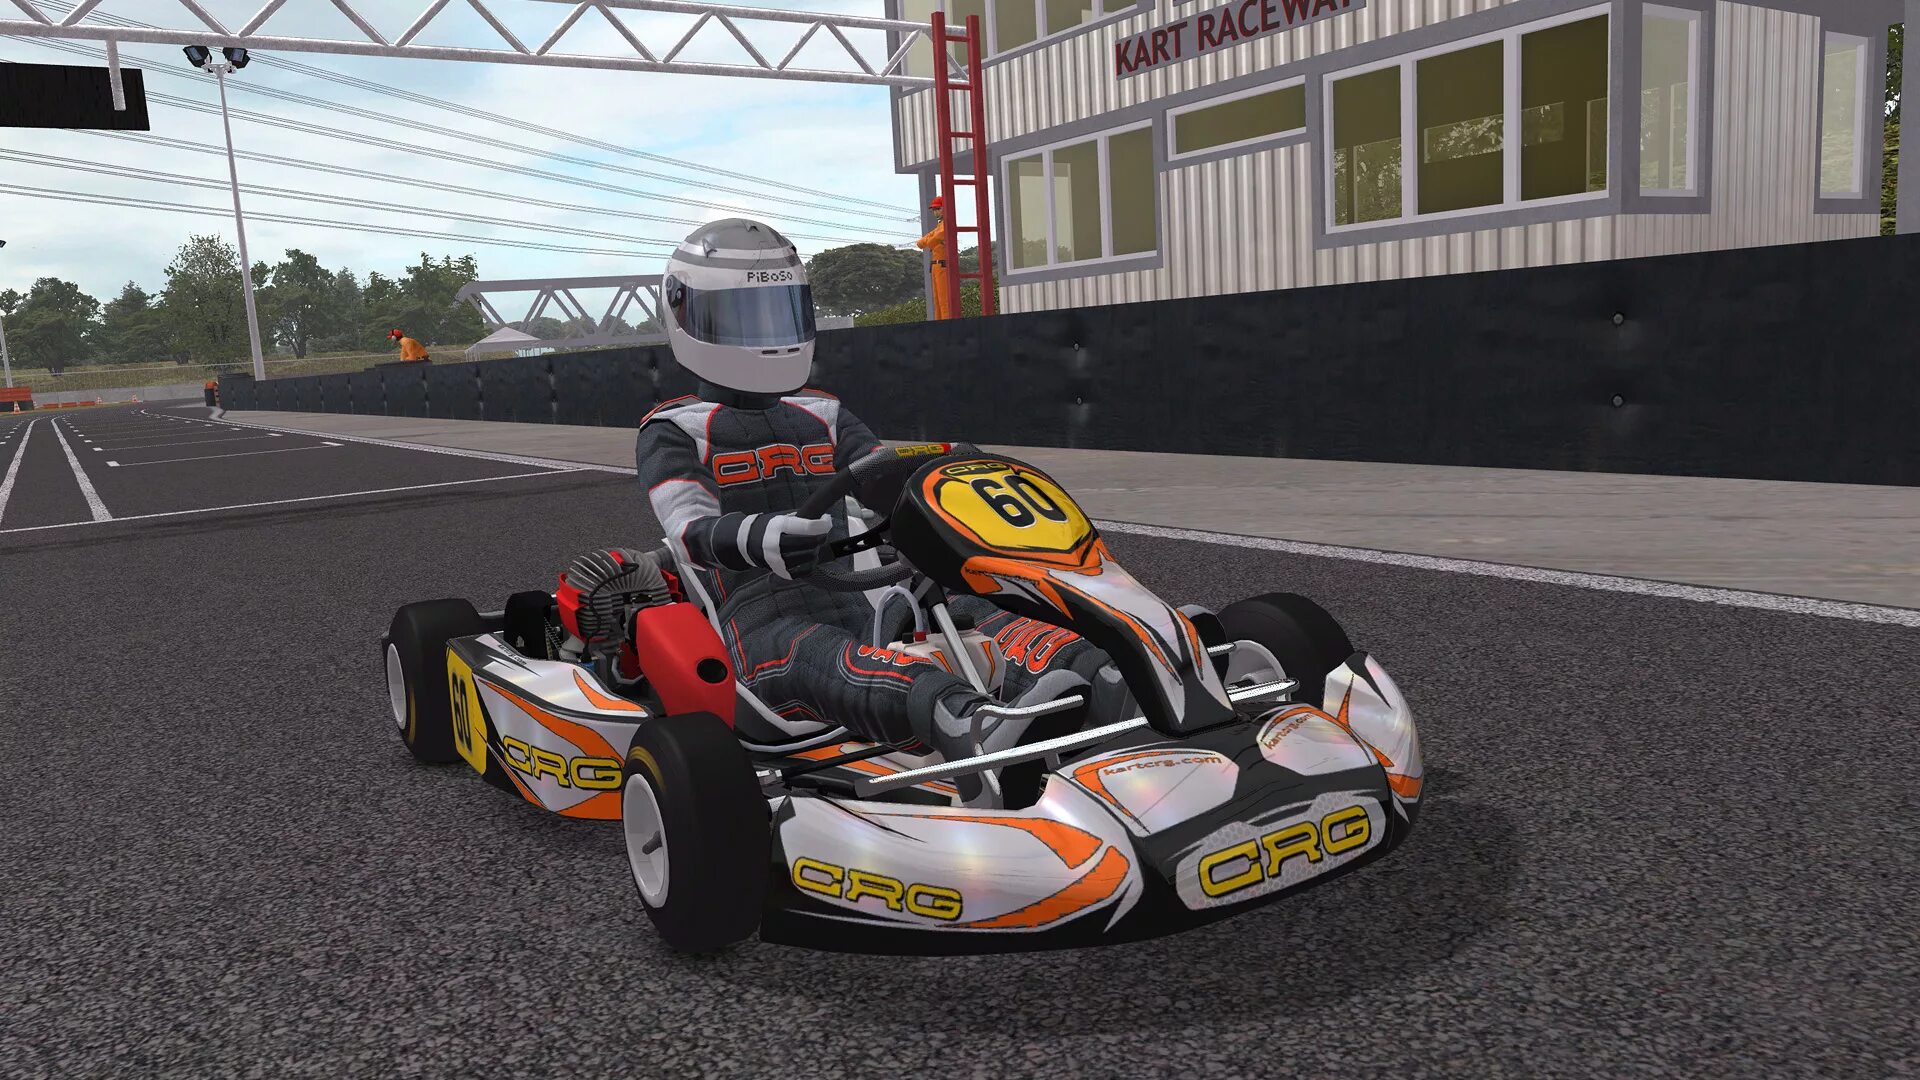 Карт рейсинг. Kart Racing Pro. Картинг GP Racing 2008 года. Симулятор картинга. Игры про картинг на ПК.